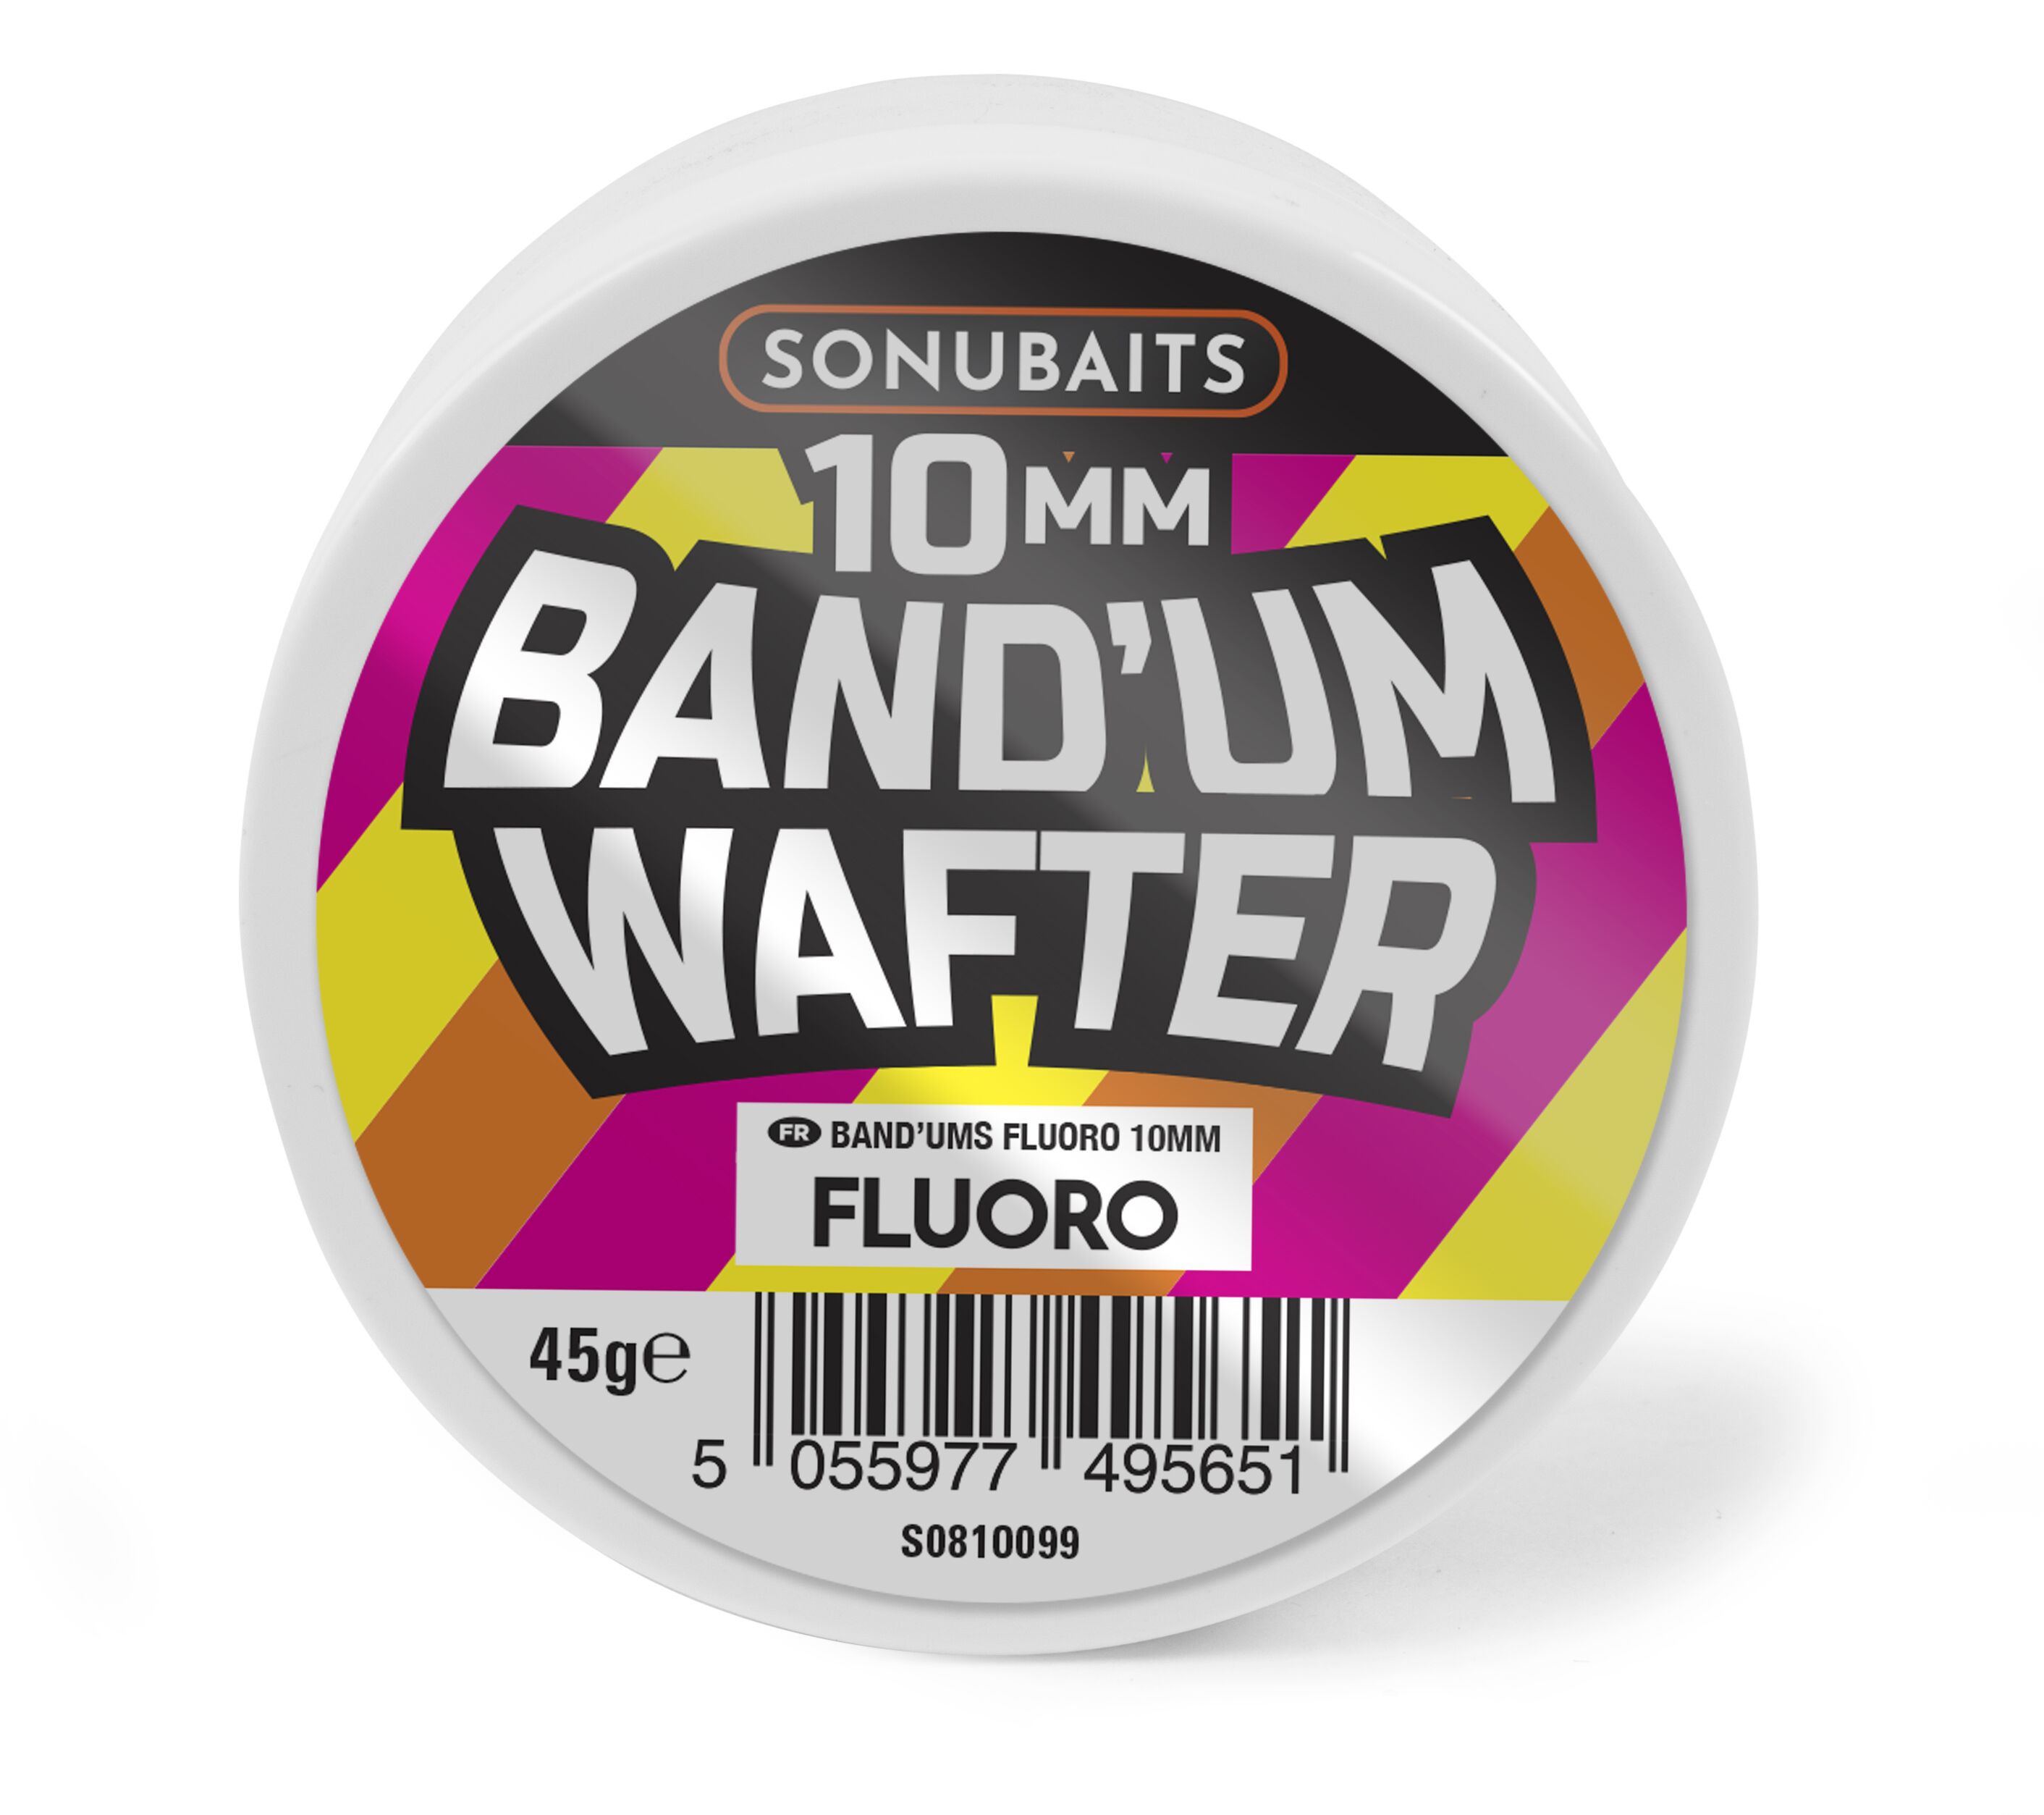 Sonubaits Band' Um Wafter Fluoro 10mm